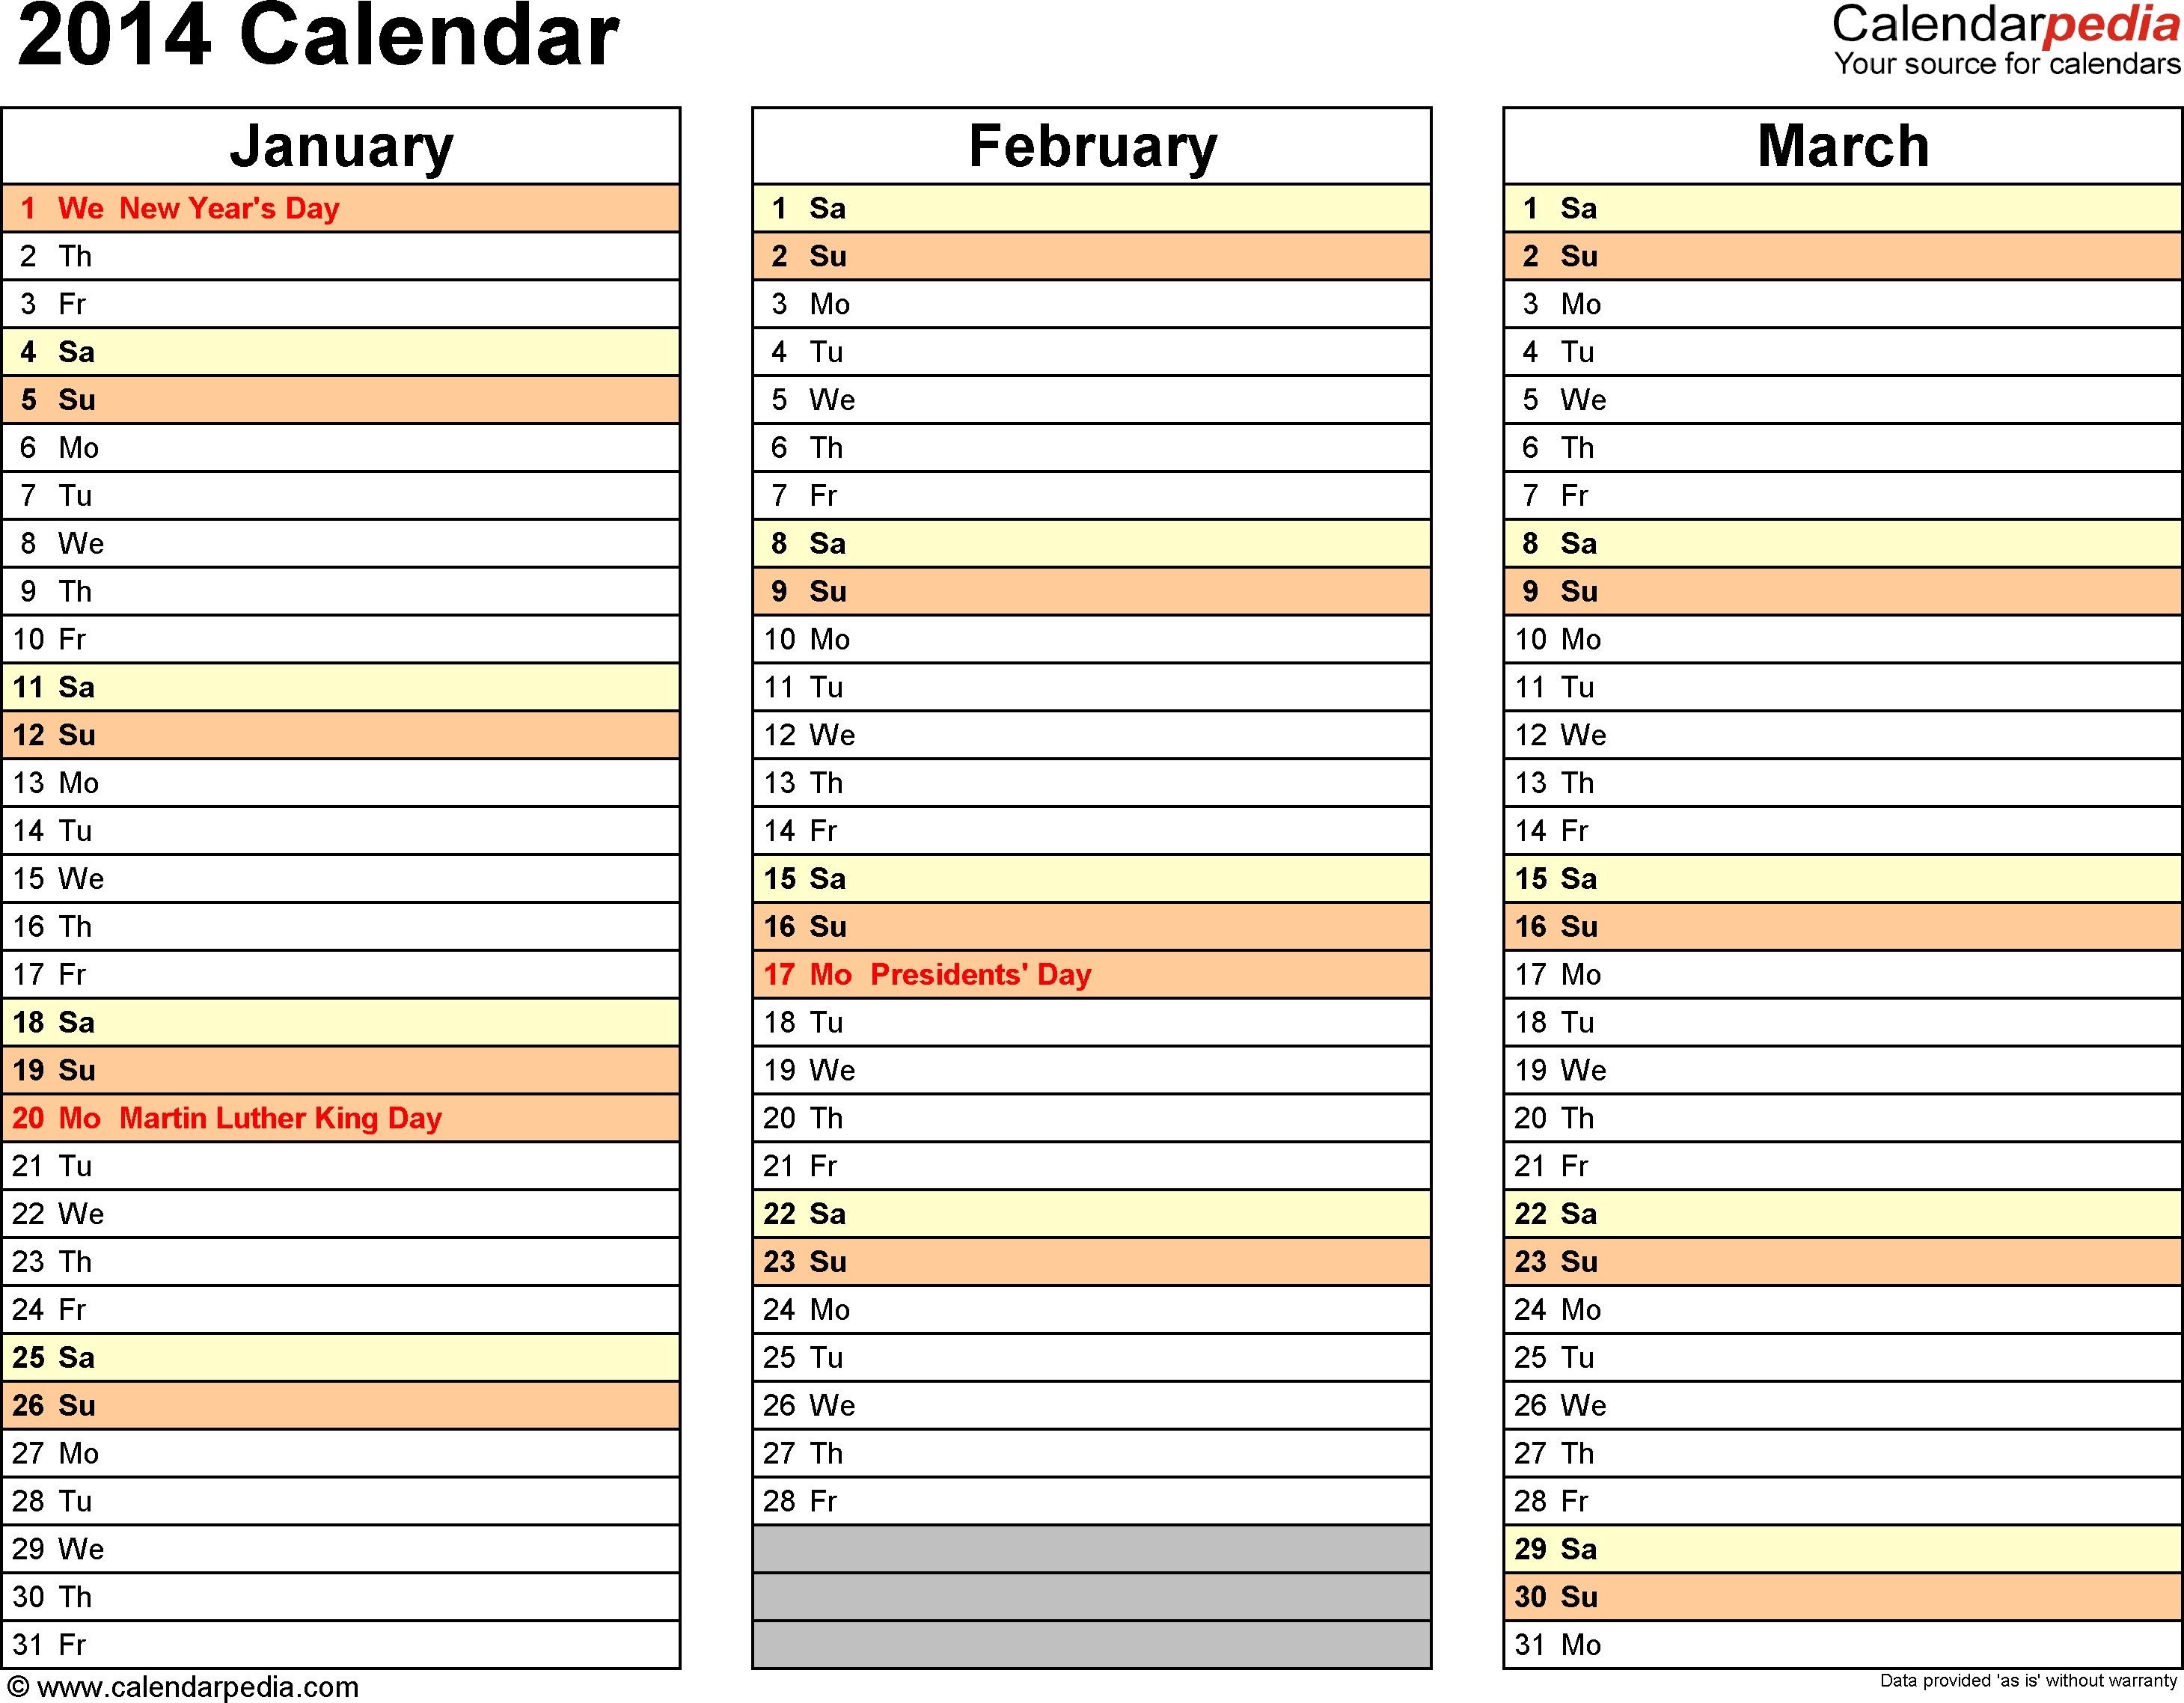 2014 Calendar - 13 Free Printable Word Calendar Templates Print 2 Calendar Months Per Page